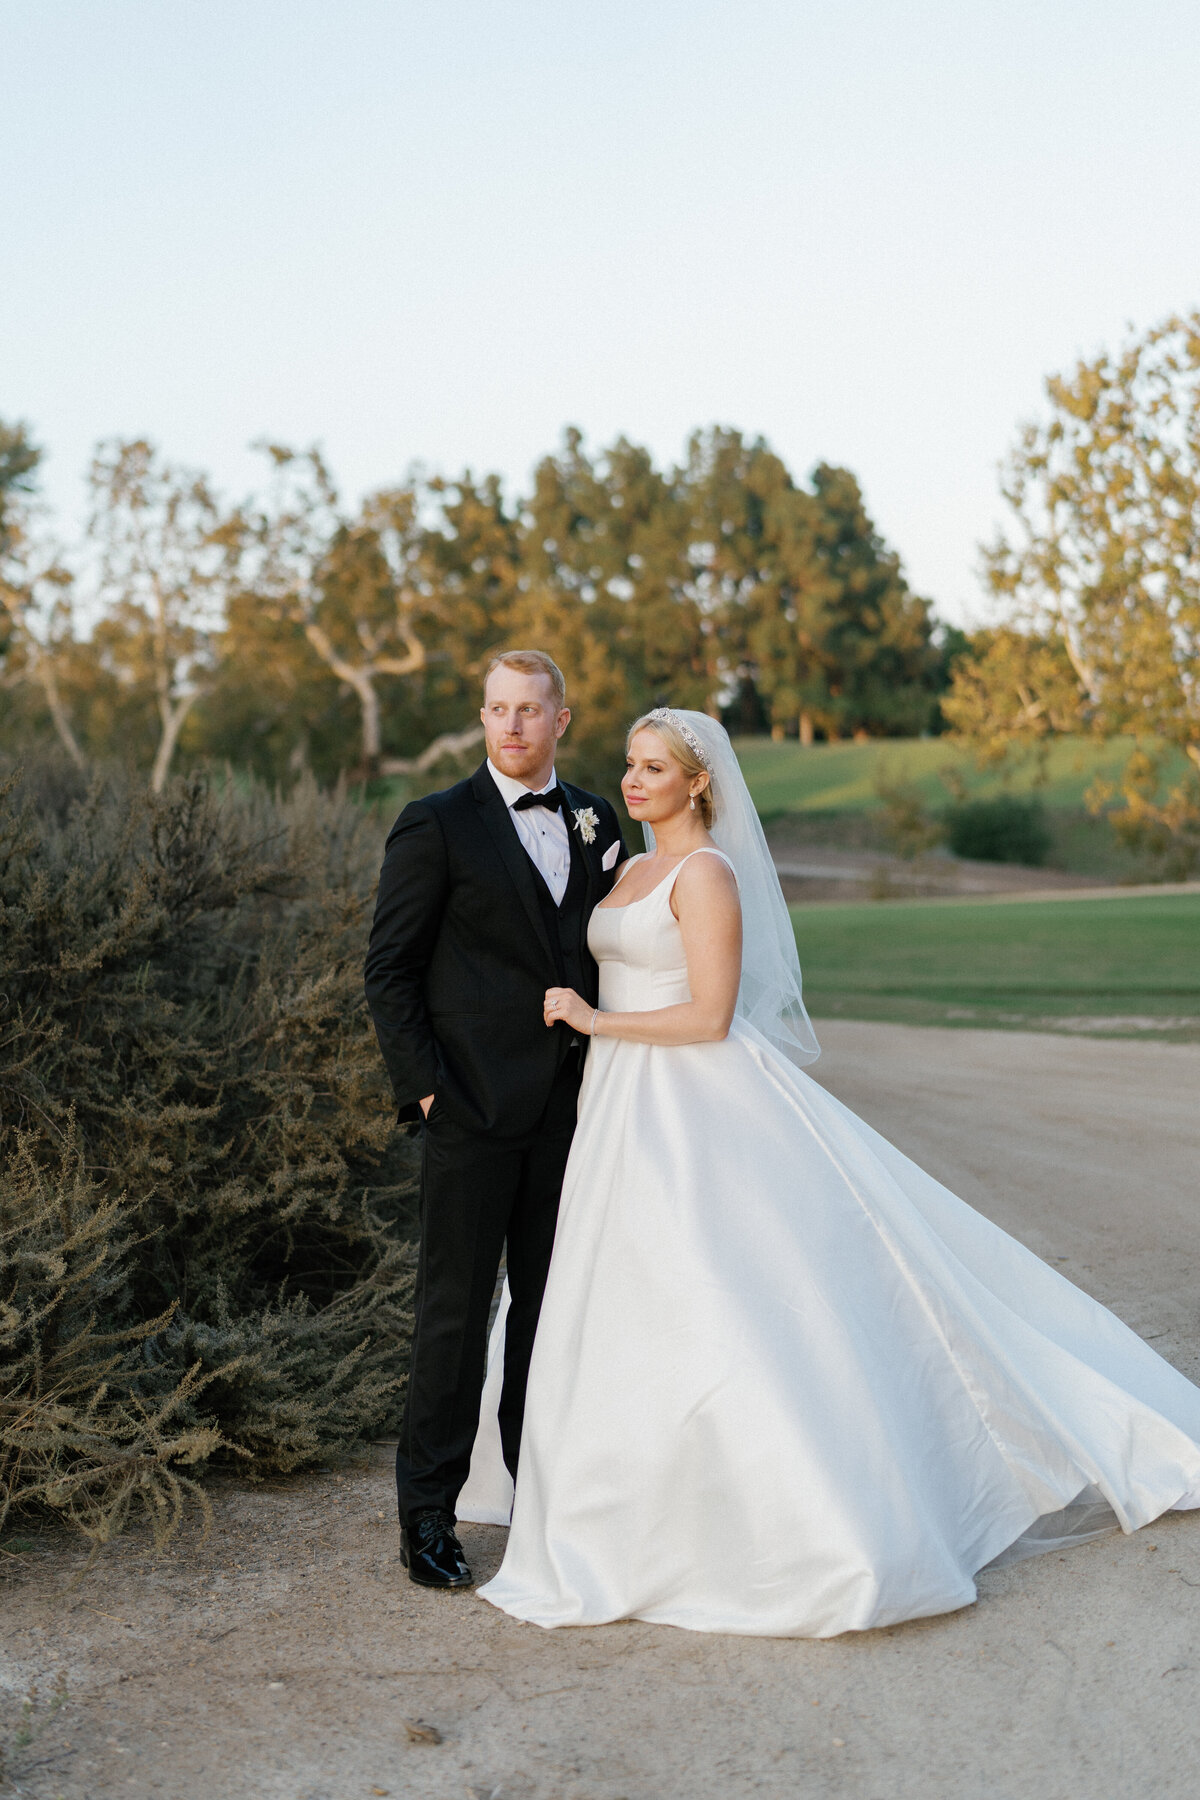 JESSICA RIEKE PHOTOGRAPHY - MATT AND JENNY WEDDING-762-2